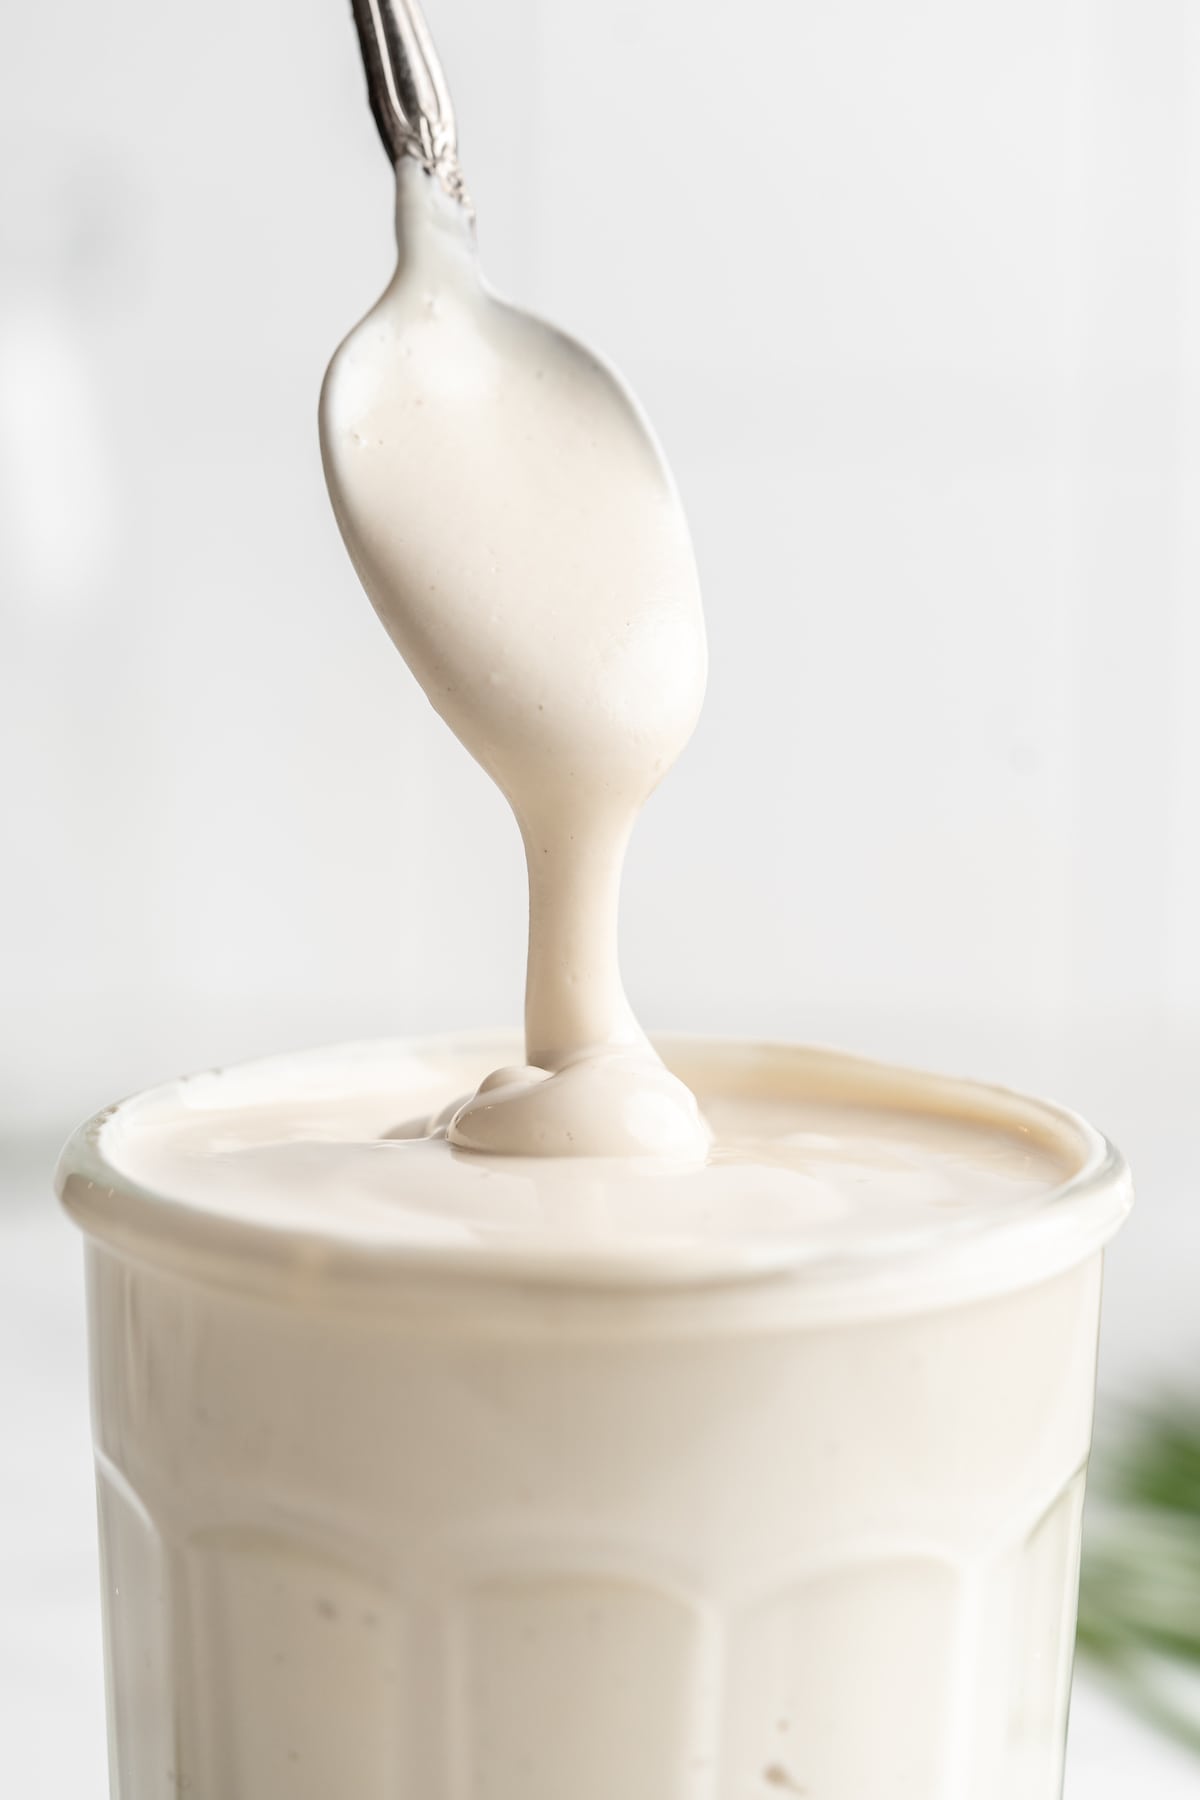 Spoon dripping vegan sour cream into jar